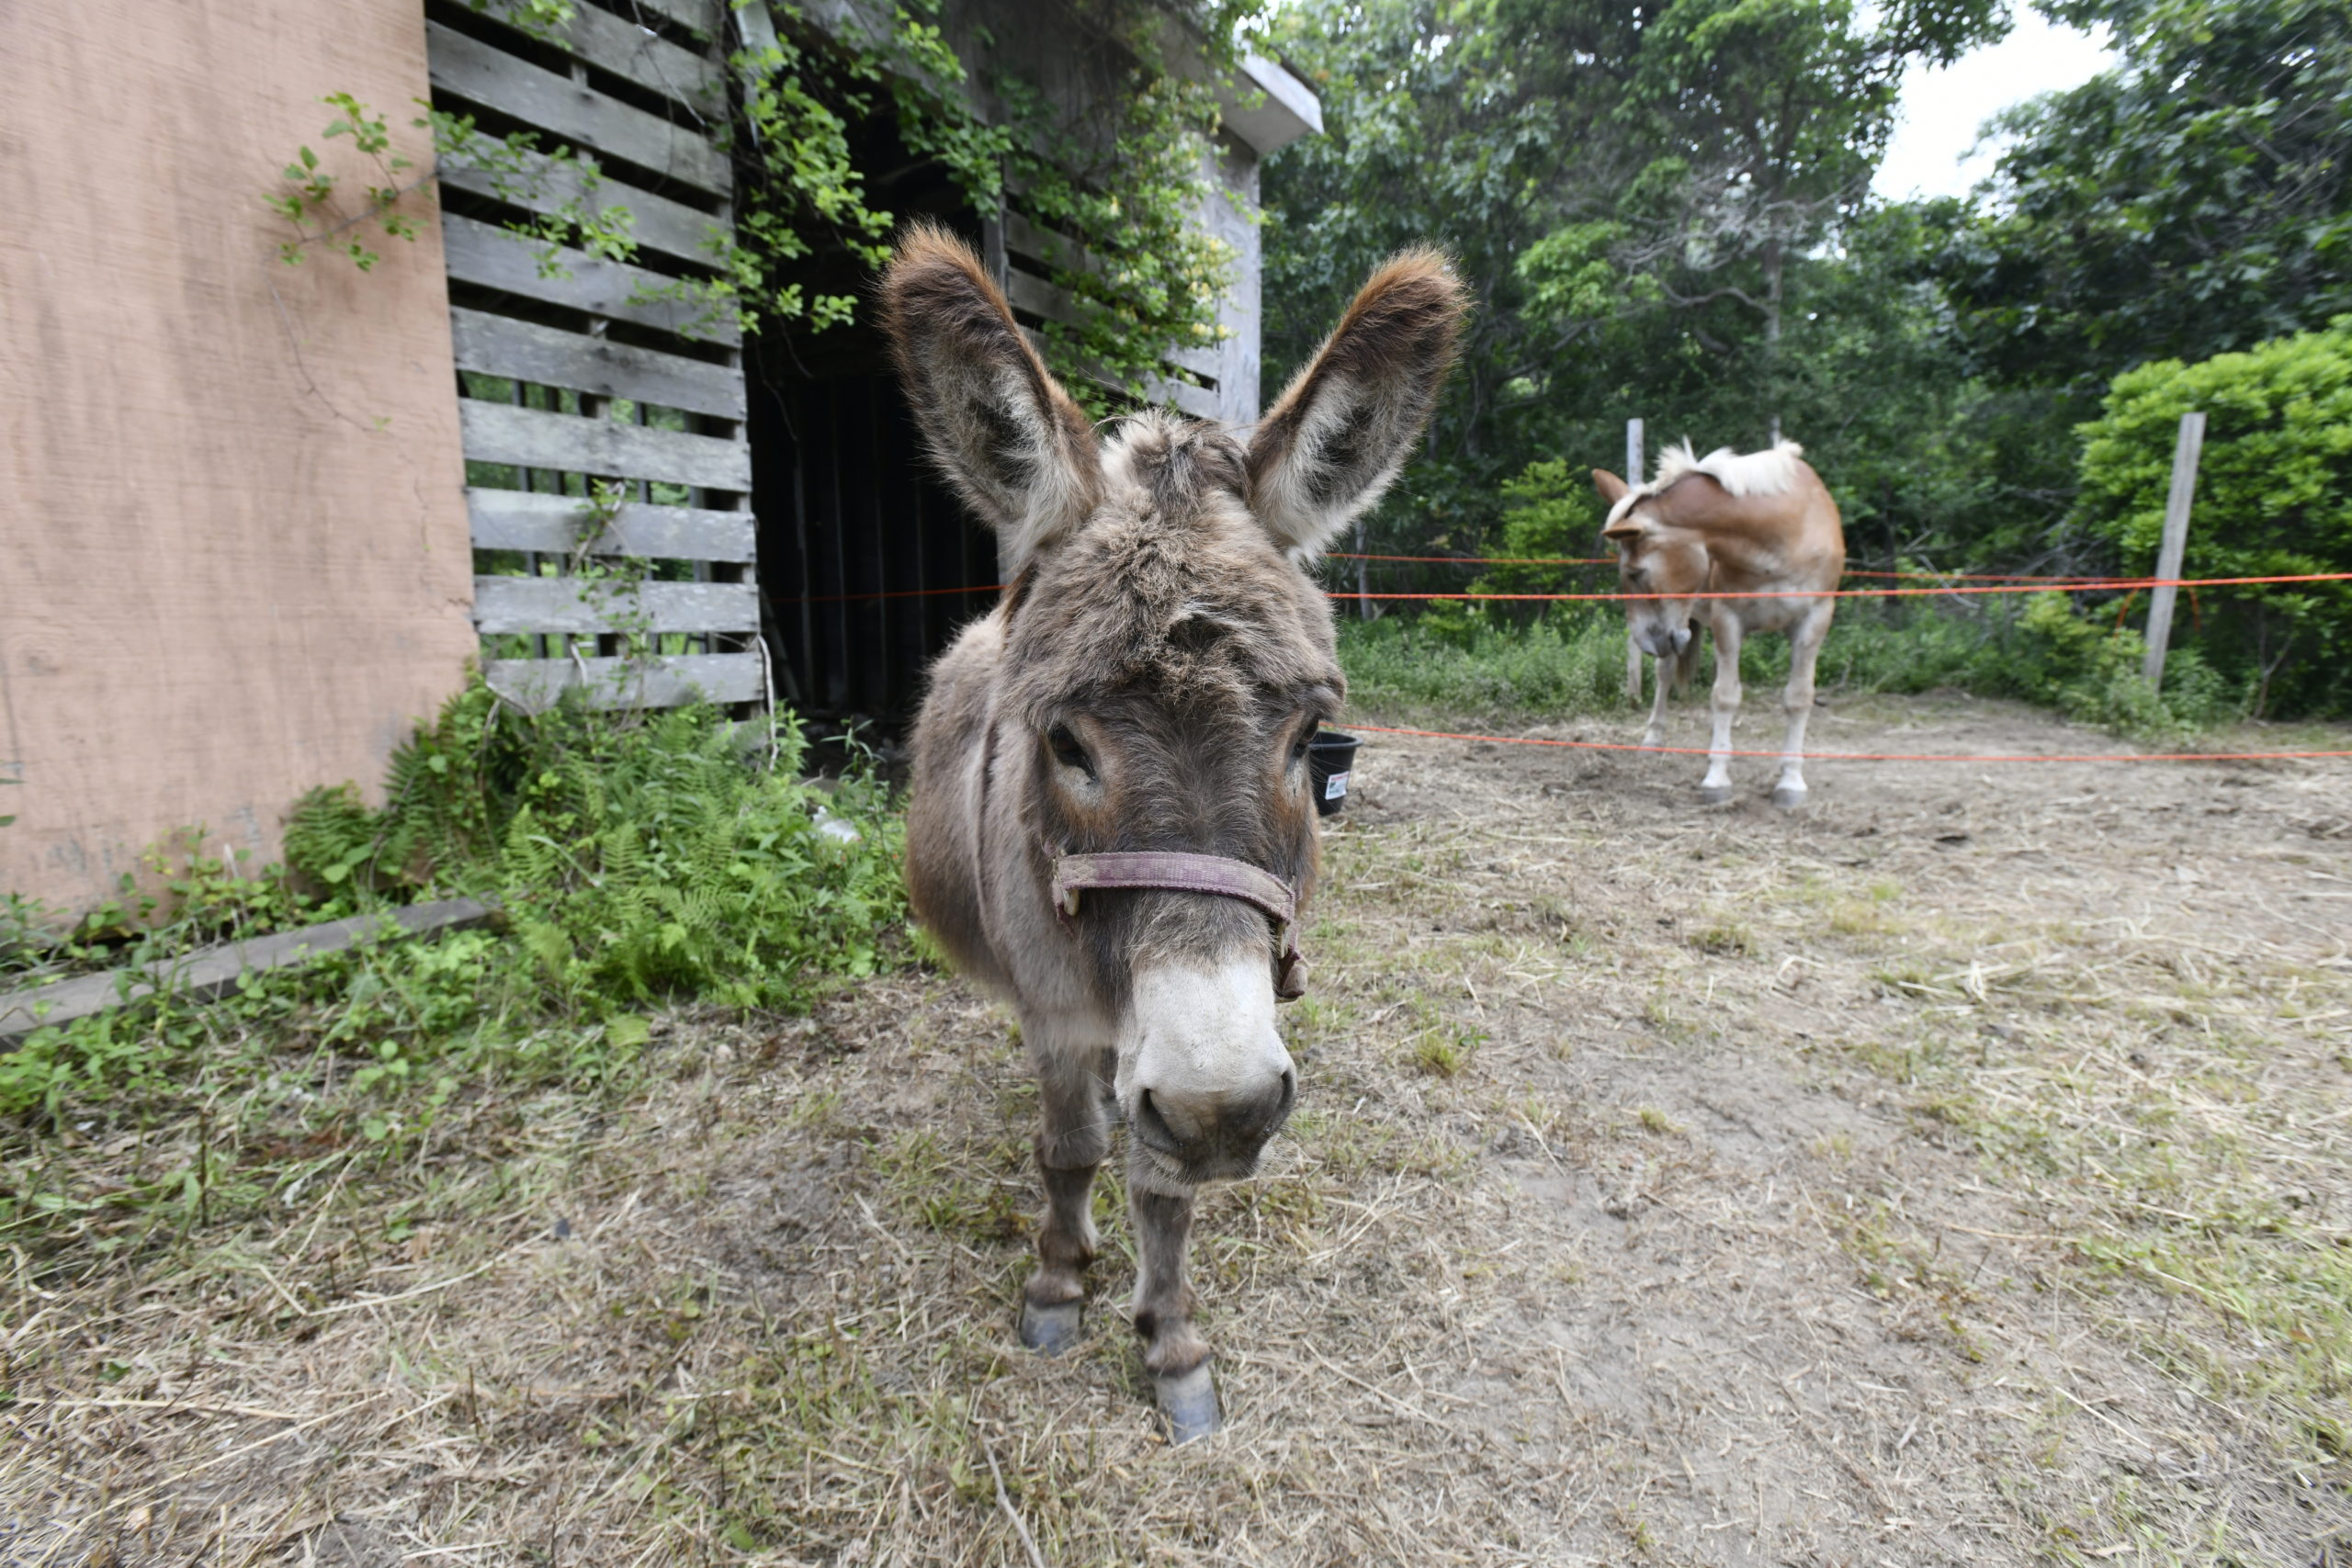 Benny the donkey.  DANA SHAW